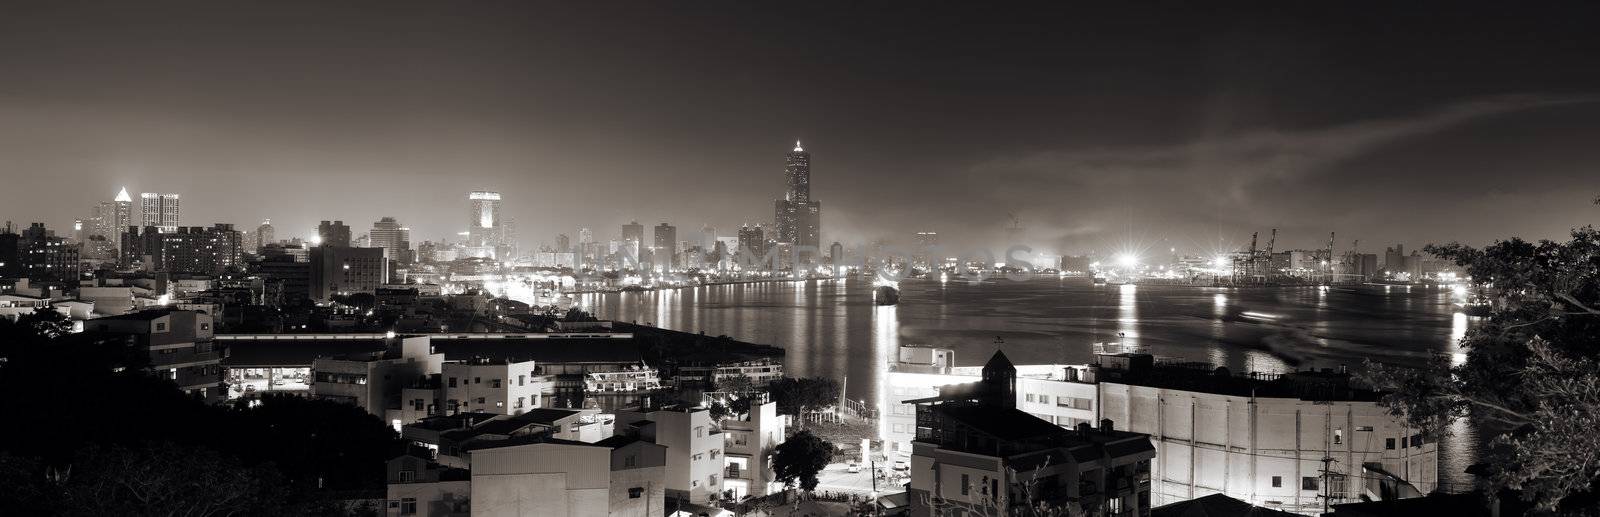 city night scene of panorama by elwynn